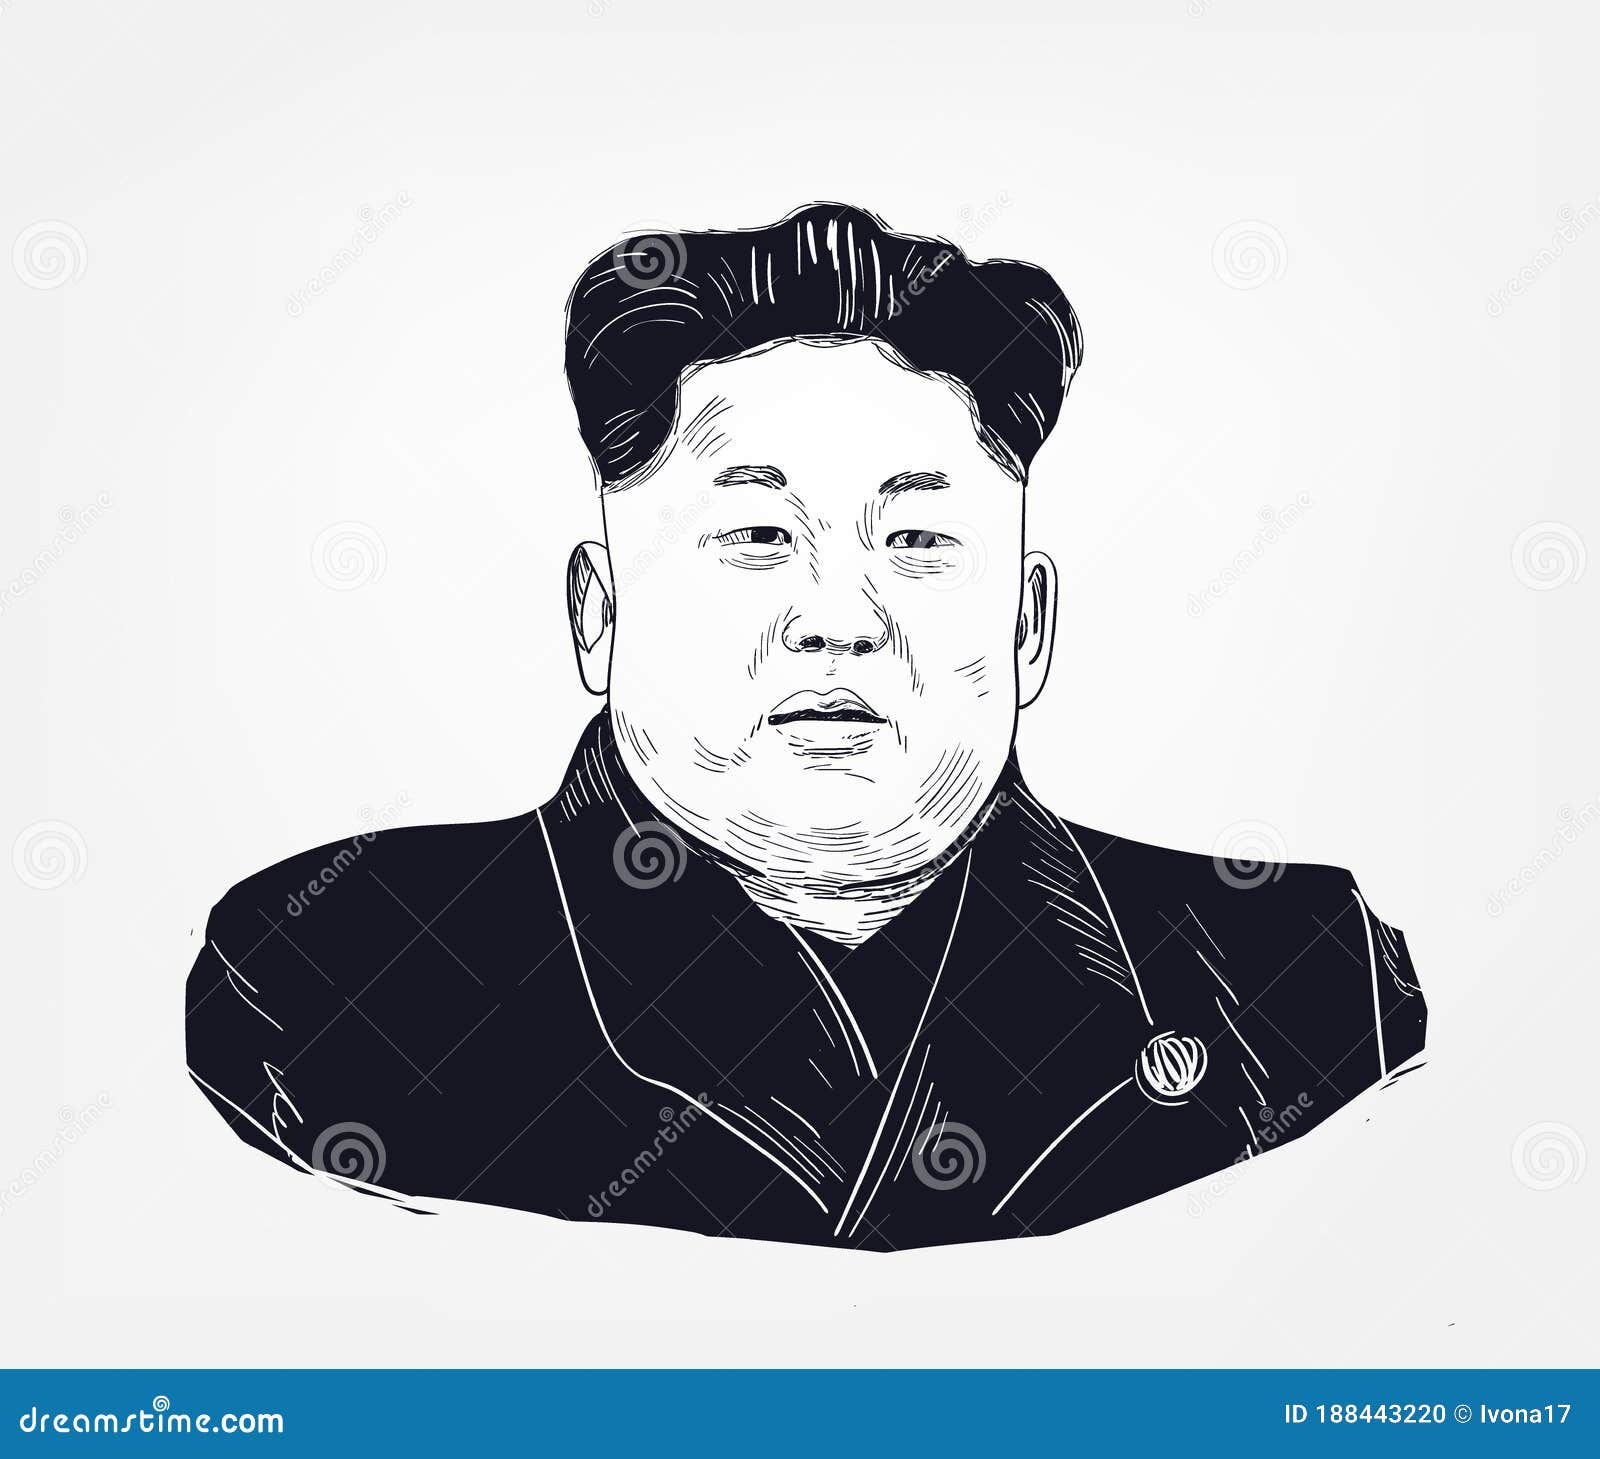 Kim Jongun by RobertoBizama on DeviantArt